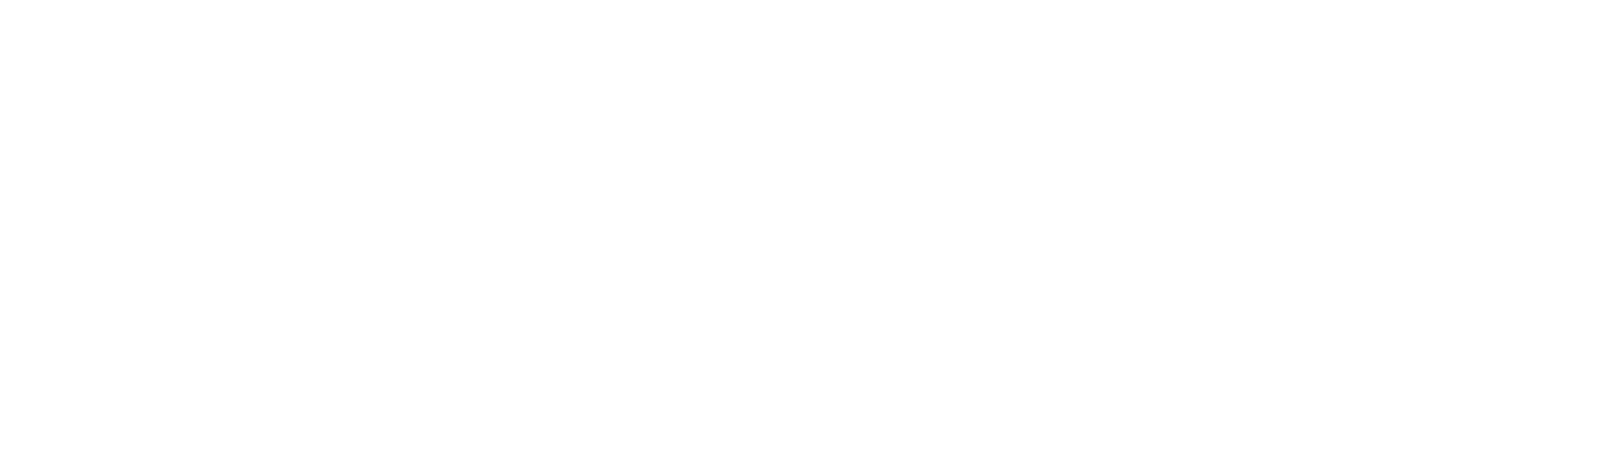 Sue Woodriffe Mind Body Alchemist Logo white out thicker lines